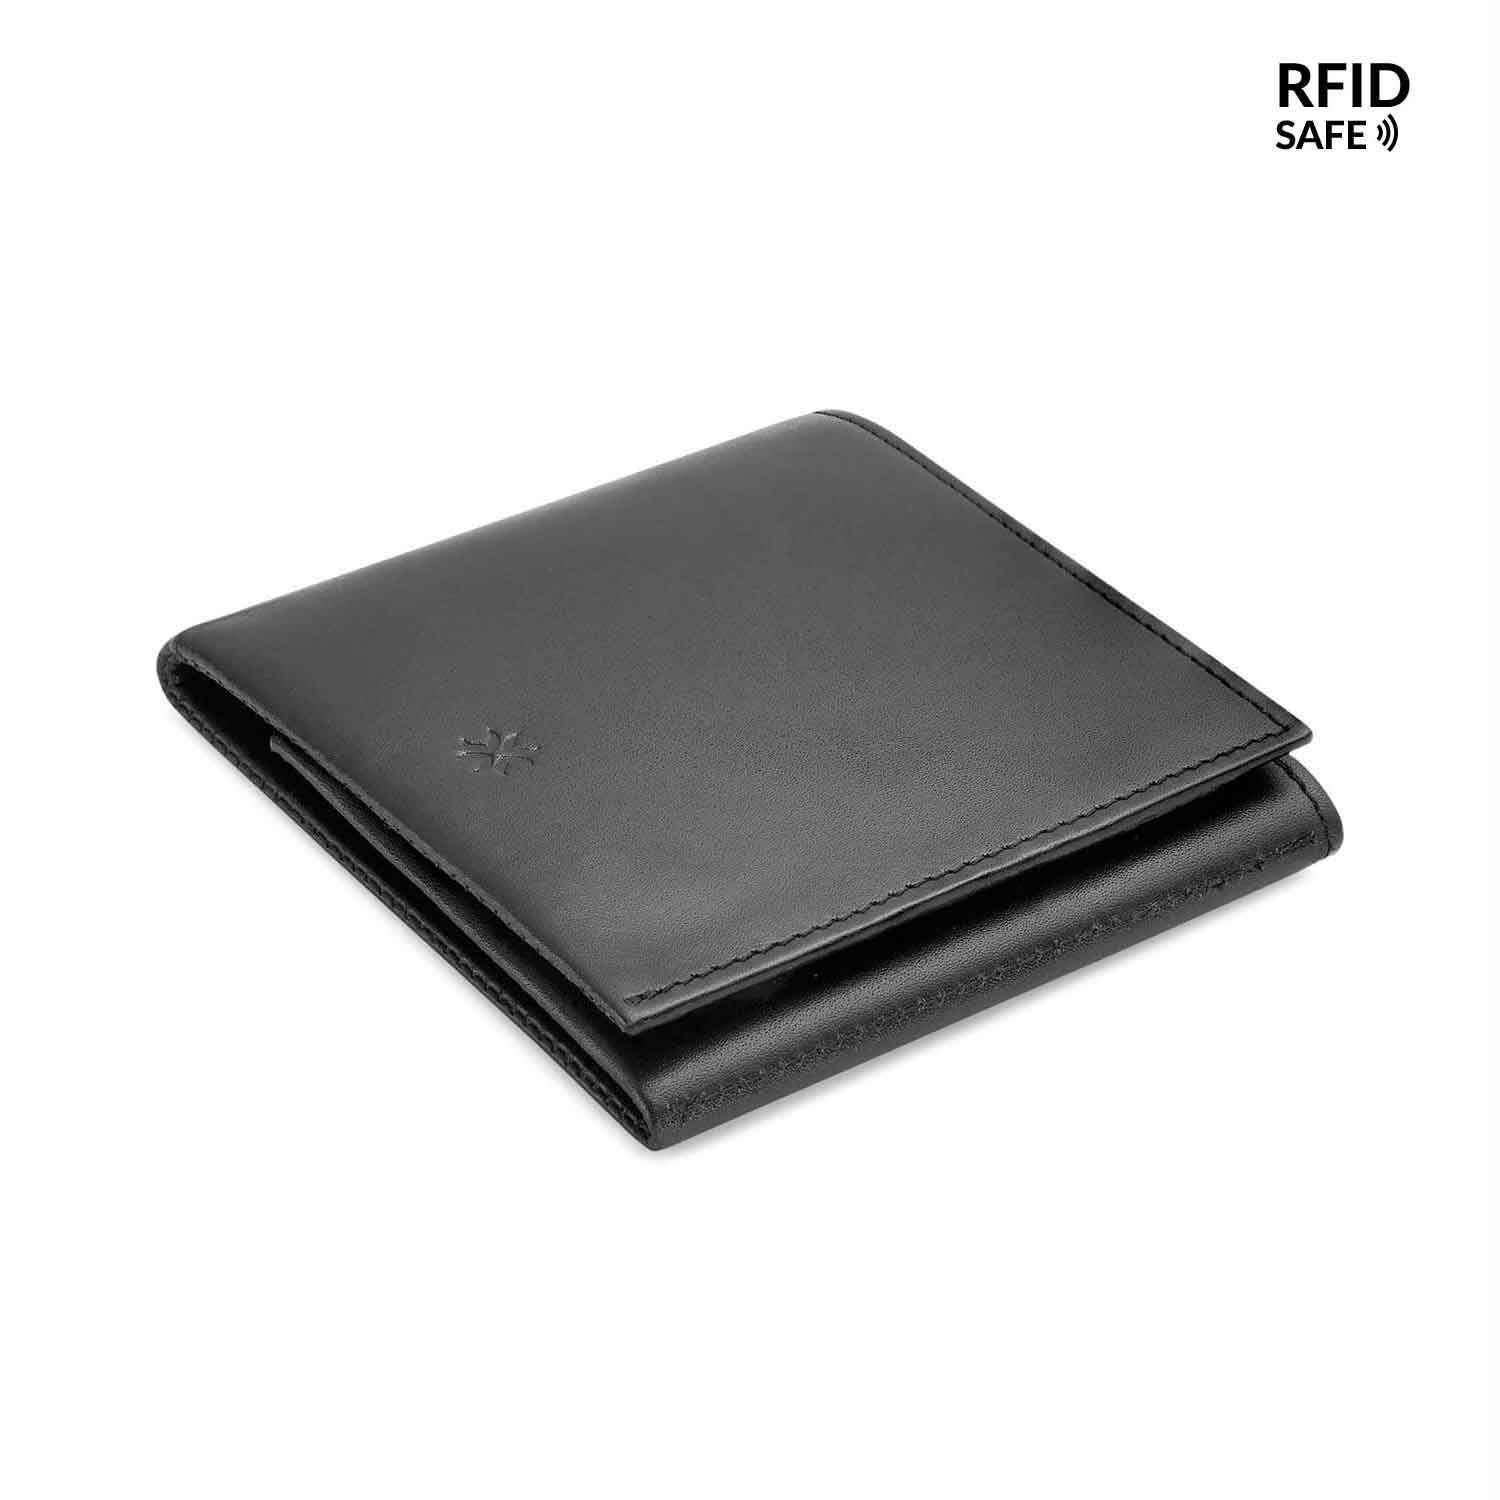 Pennline Rfid Safe Slim Minimalistic Trifold Leather Wallet